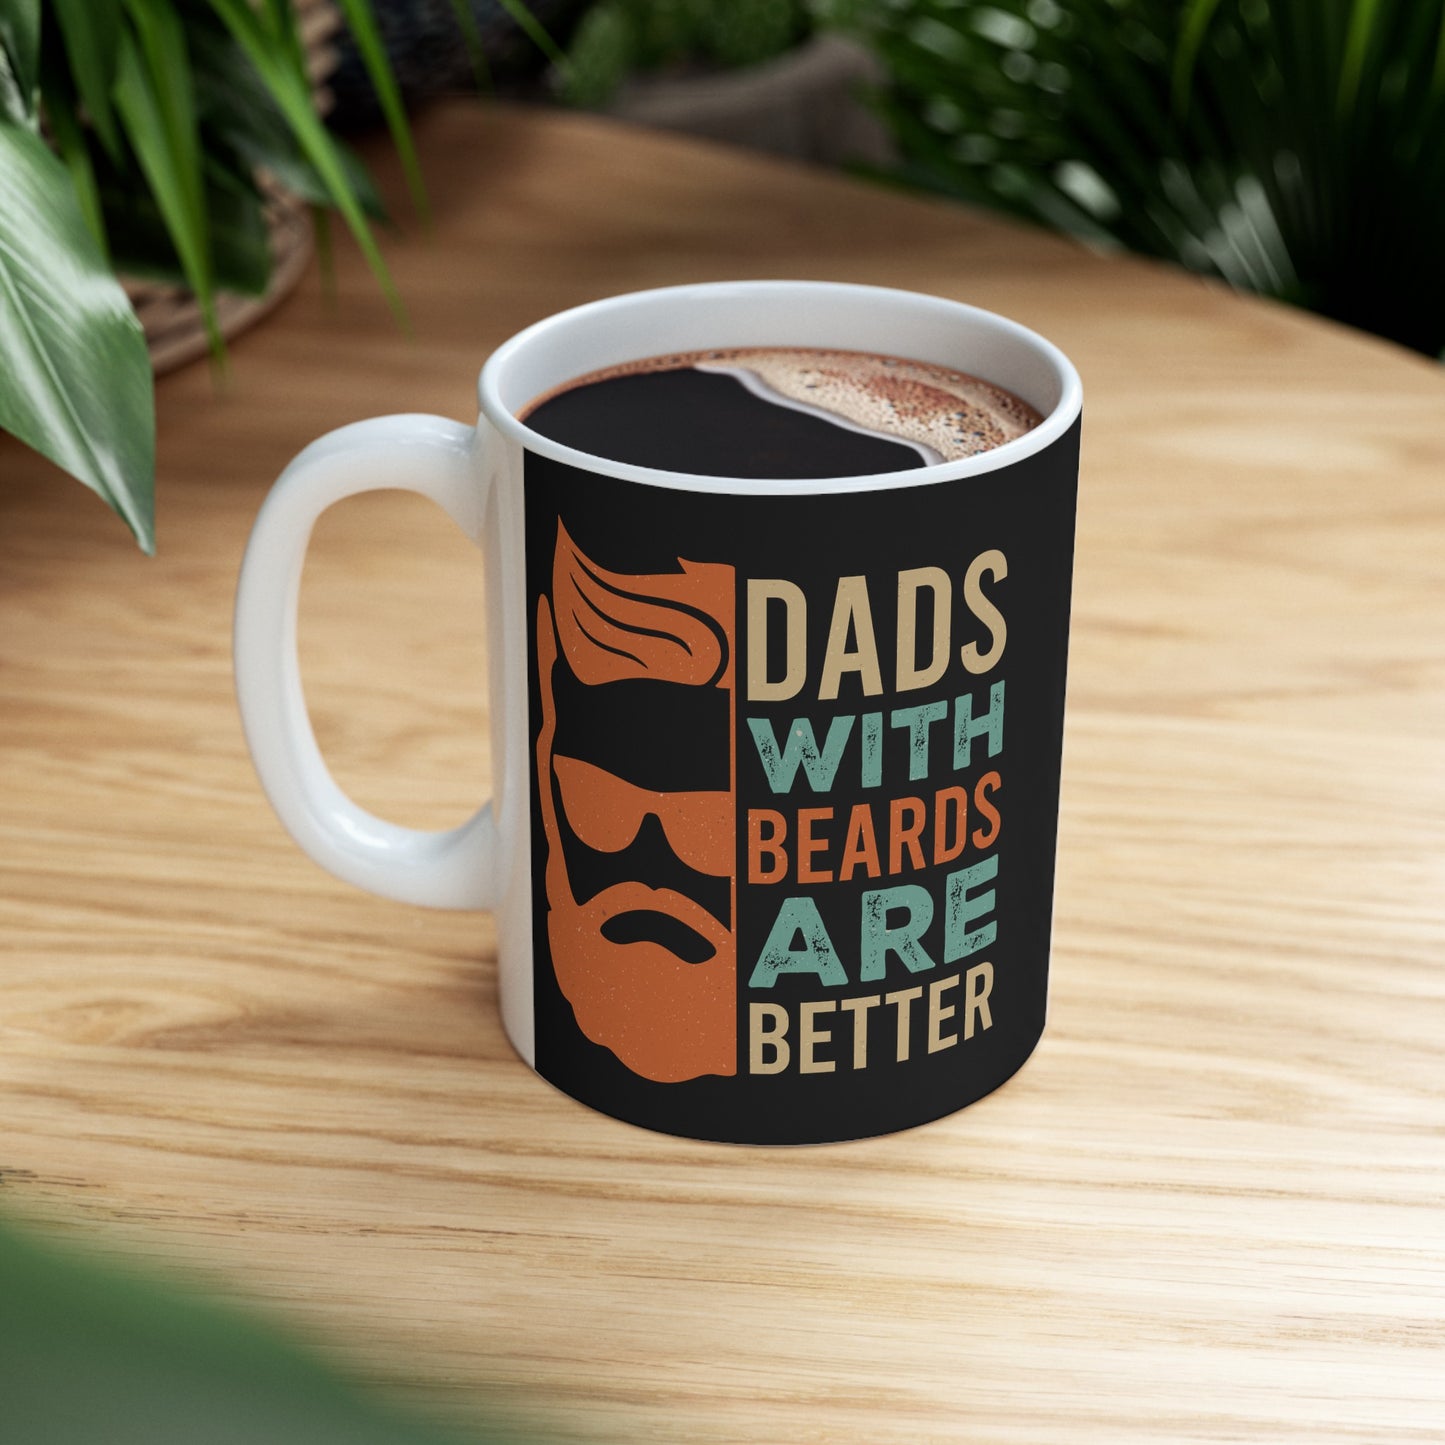 Dad's With Beards are Better Ceramic Mug, 11oz